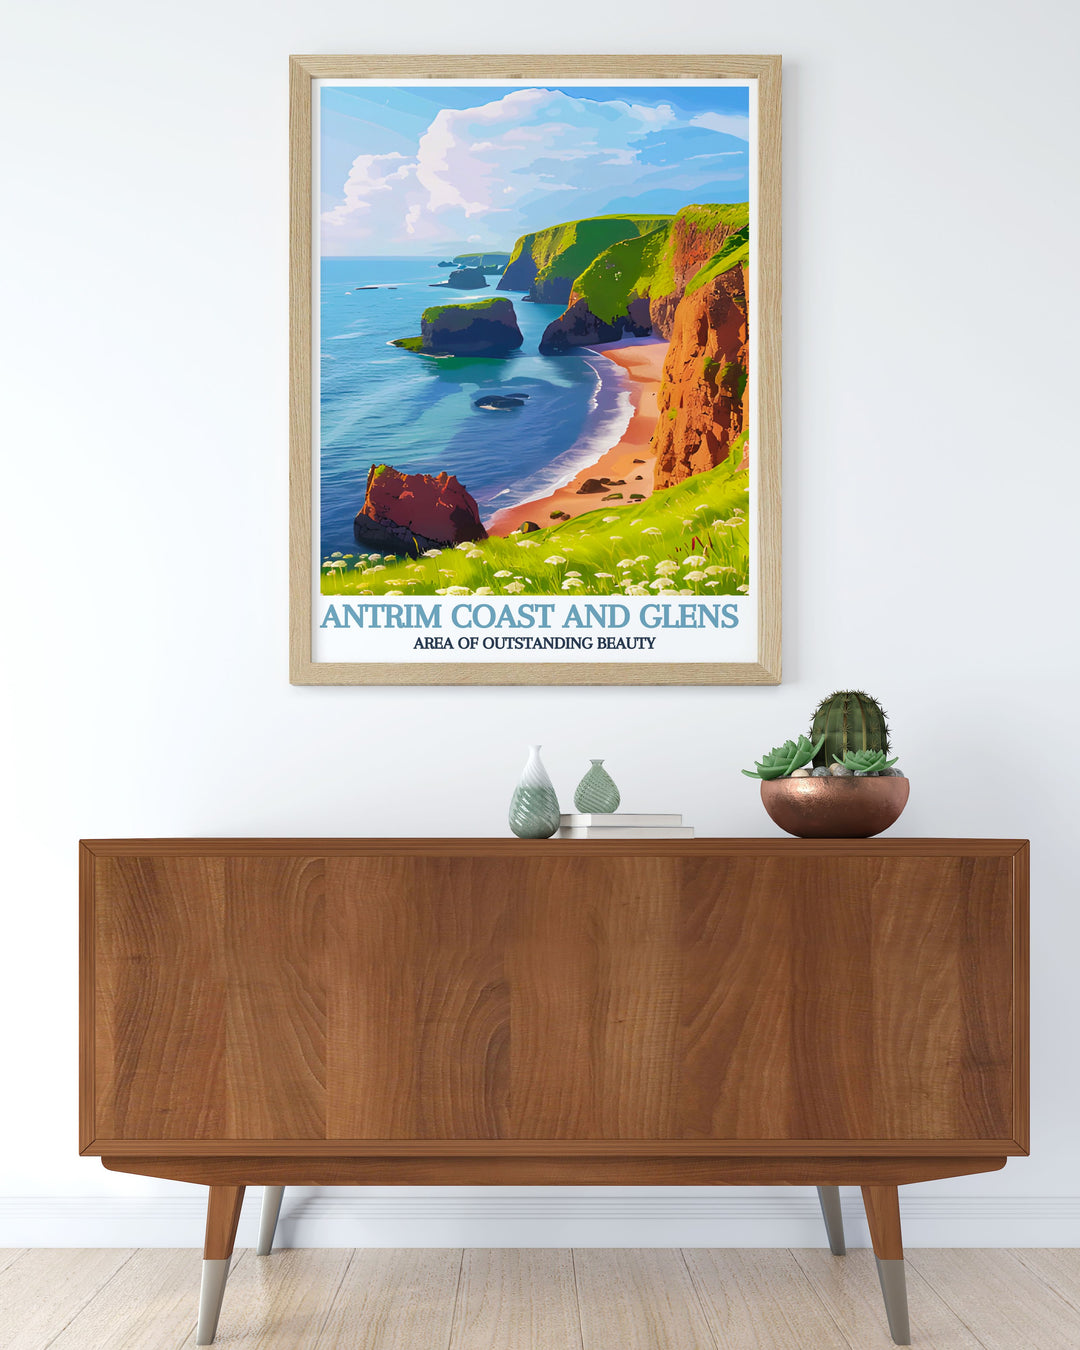 Northern Ireland landscape print, showcasing the lush greenery and dramatic coastline, perfect for those who love Irish nature.